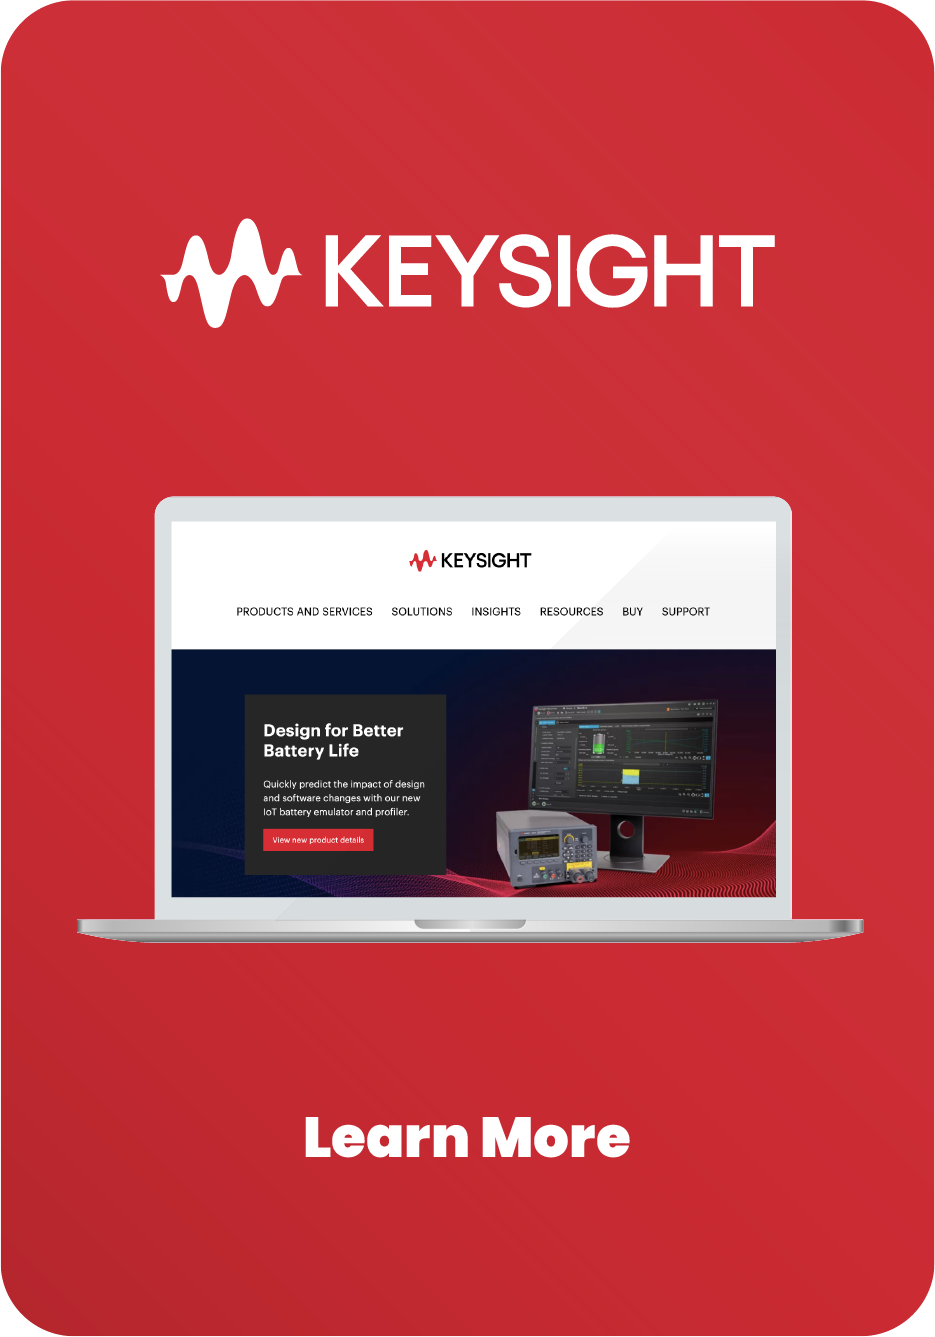 Keysight Customer Story